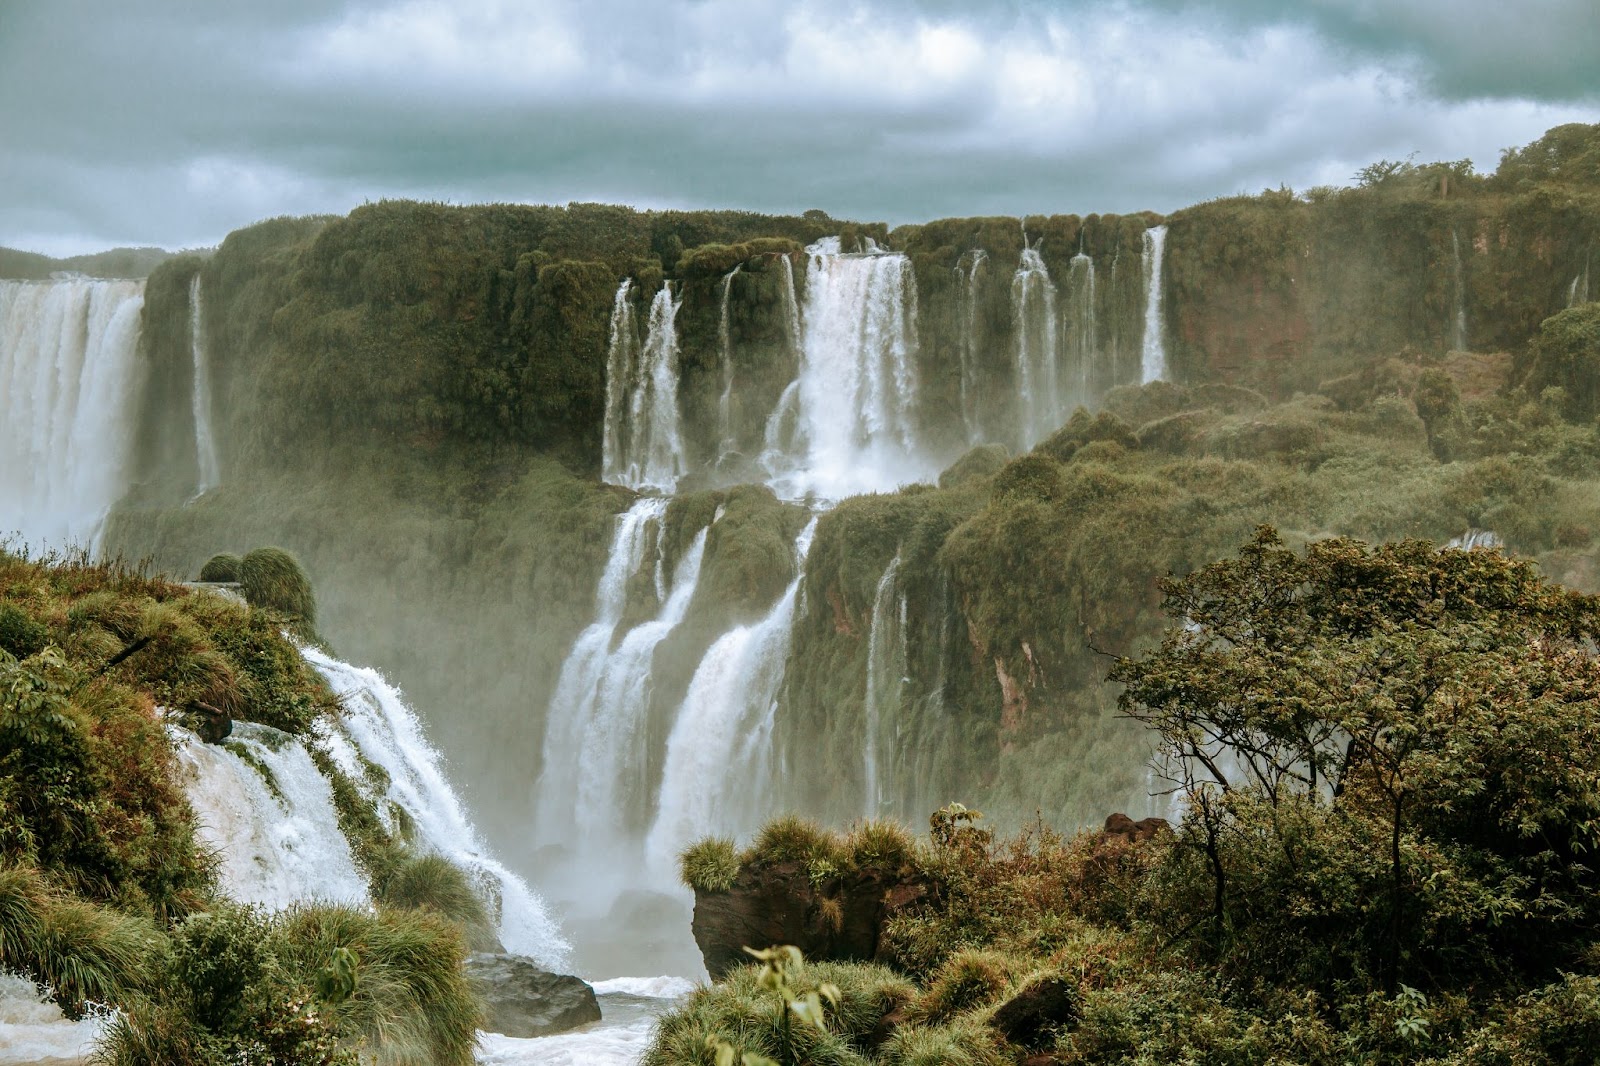 The Iguazu Falls, Argentina/ Brazil